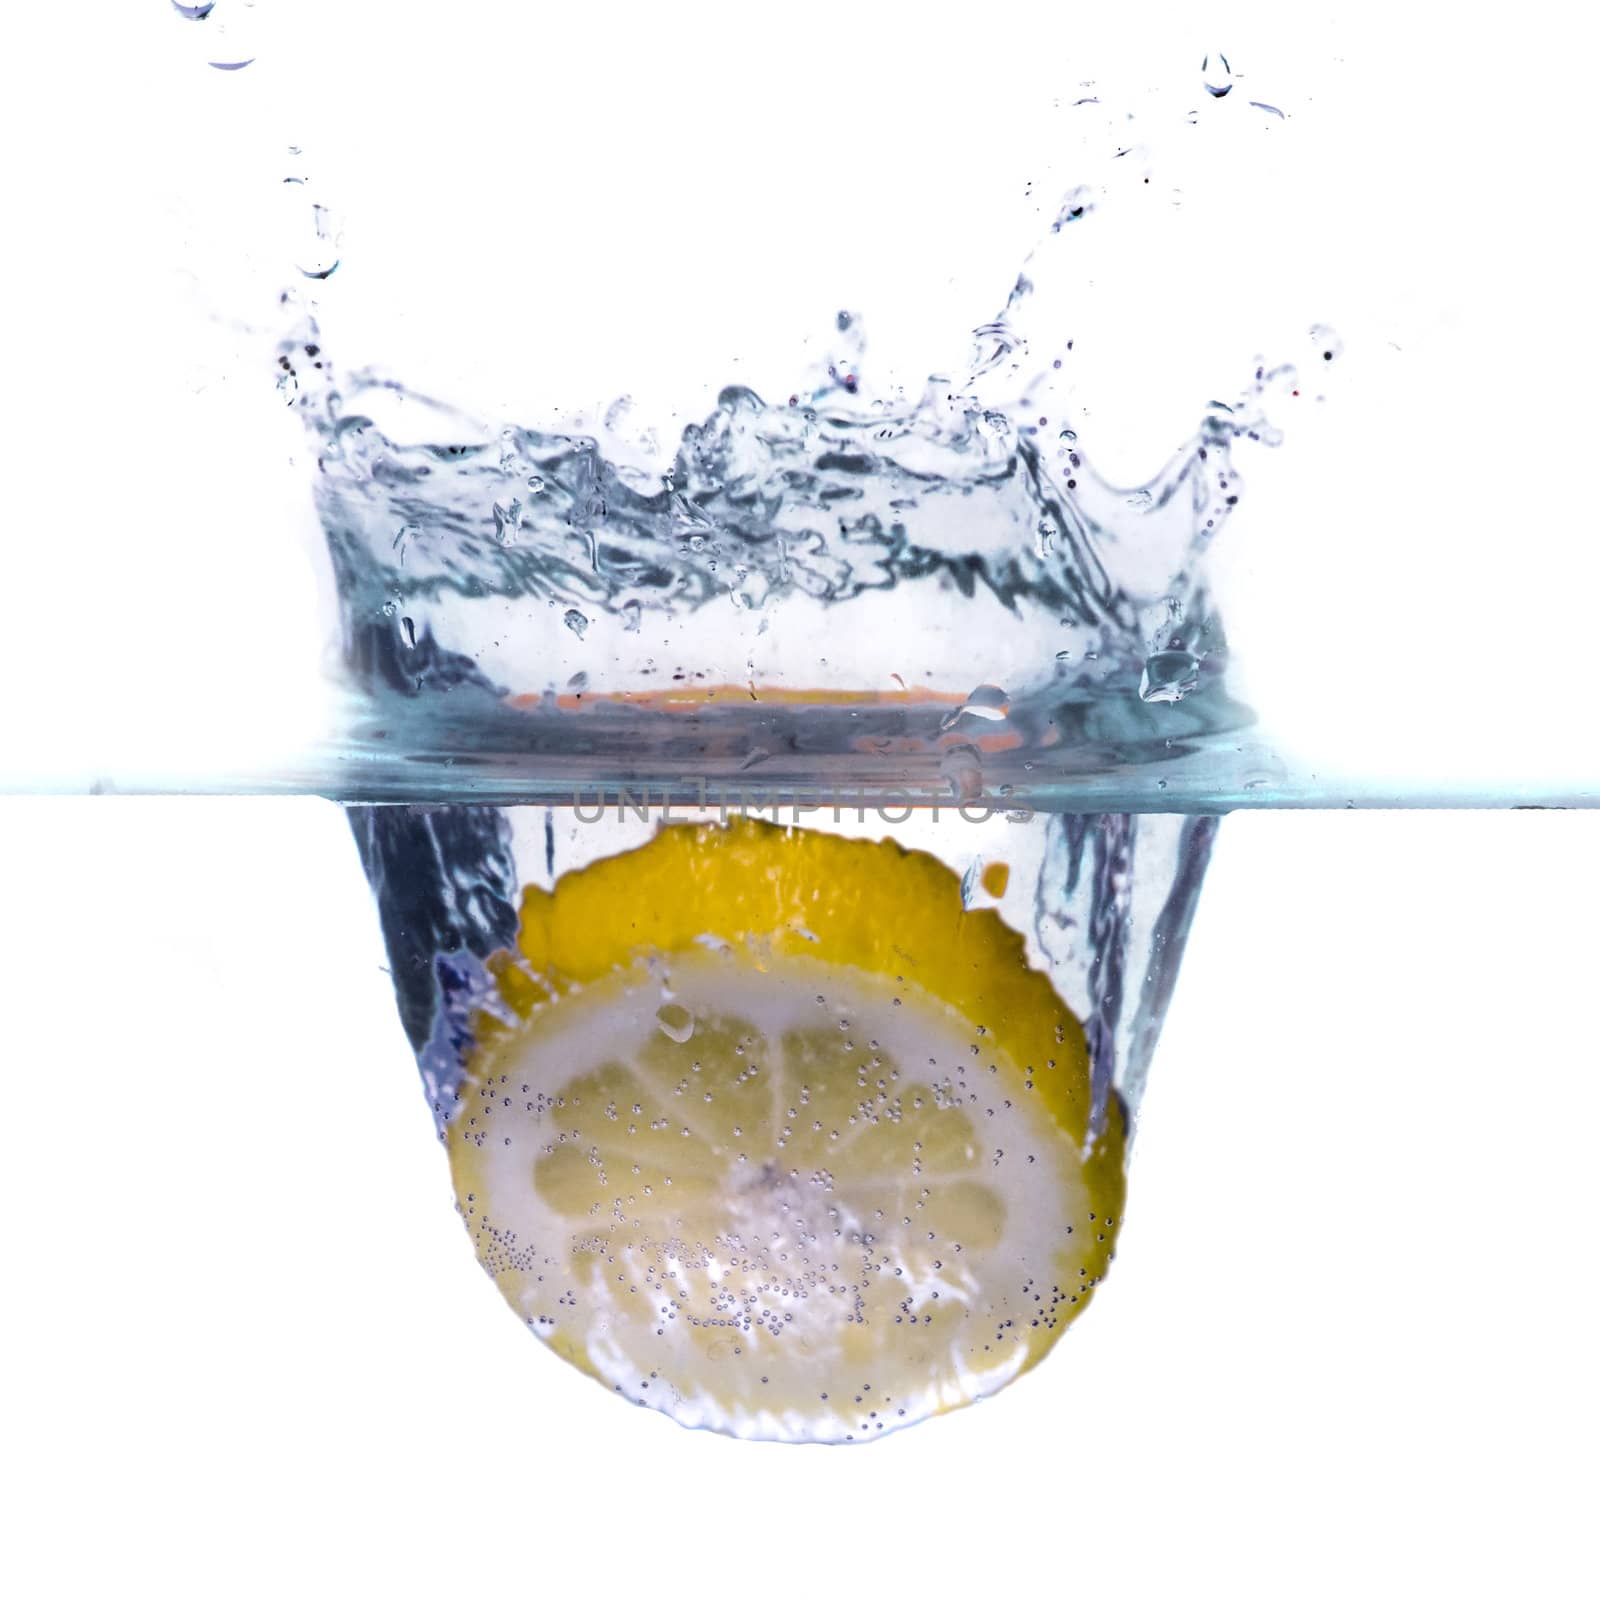 lemon splashing in pure water isolated on white background